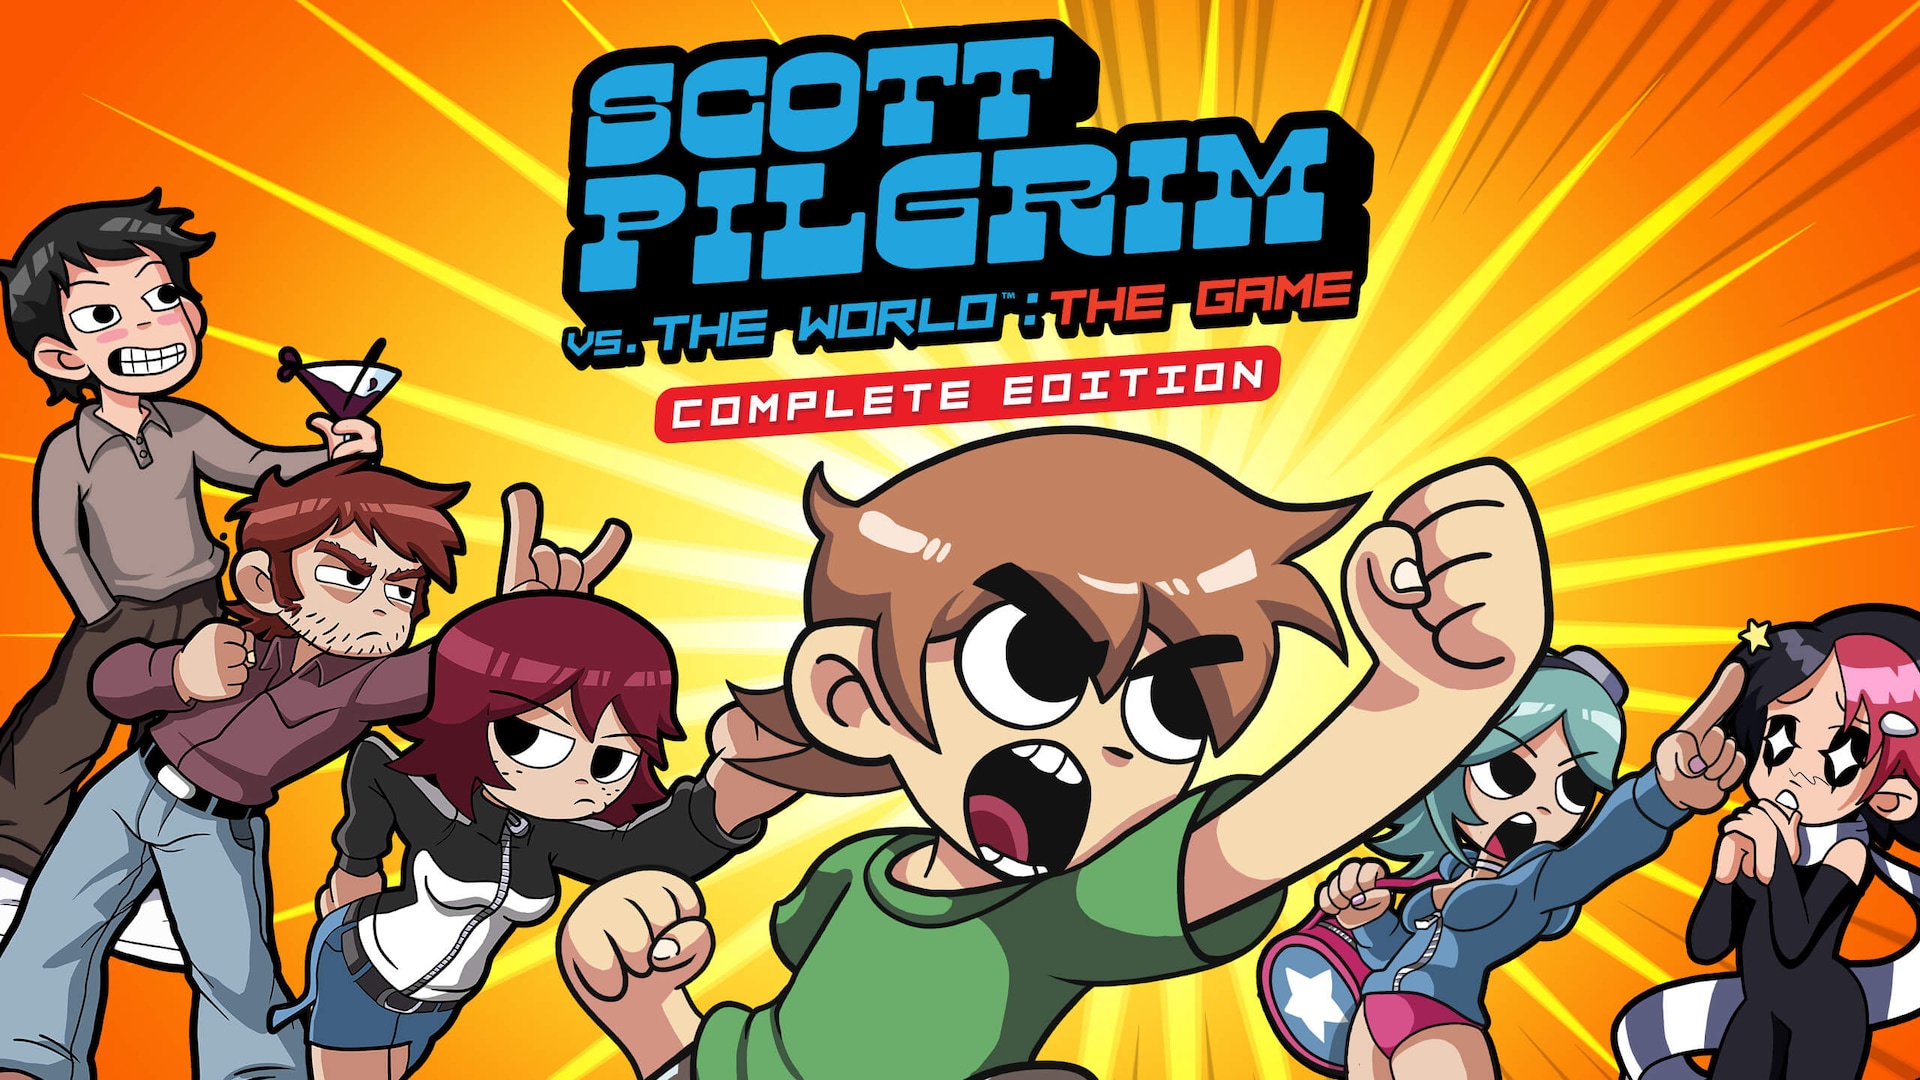 scott pilgrim vs the world the game download code